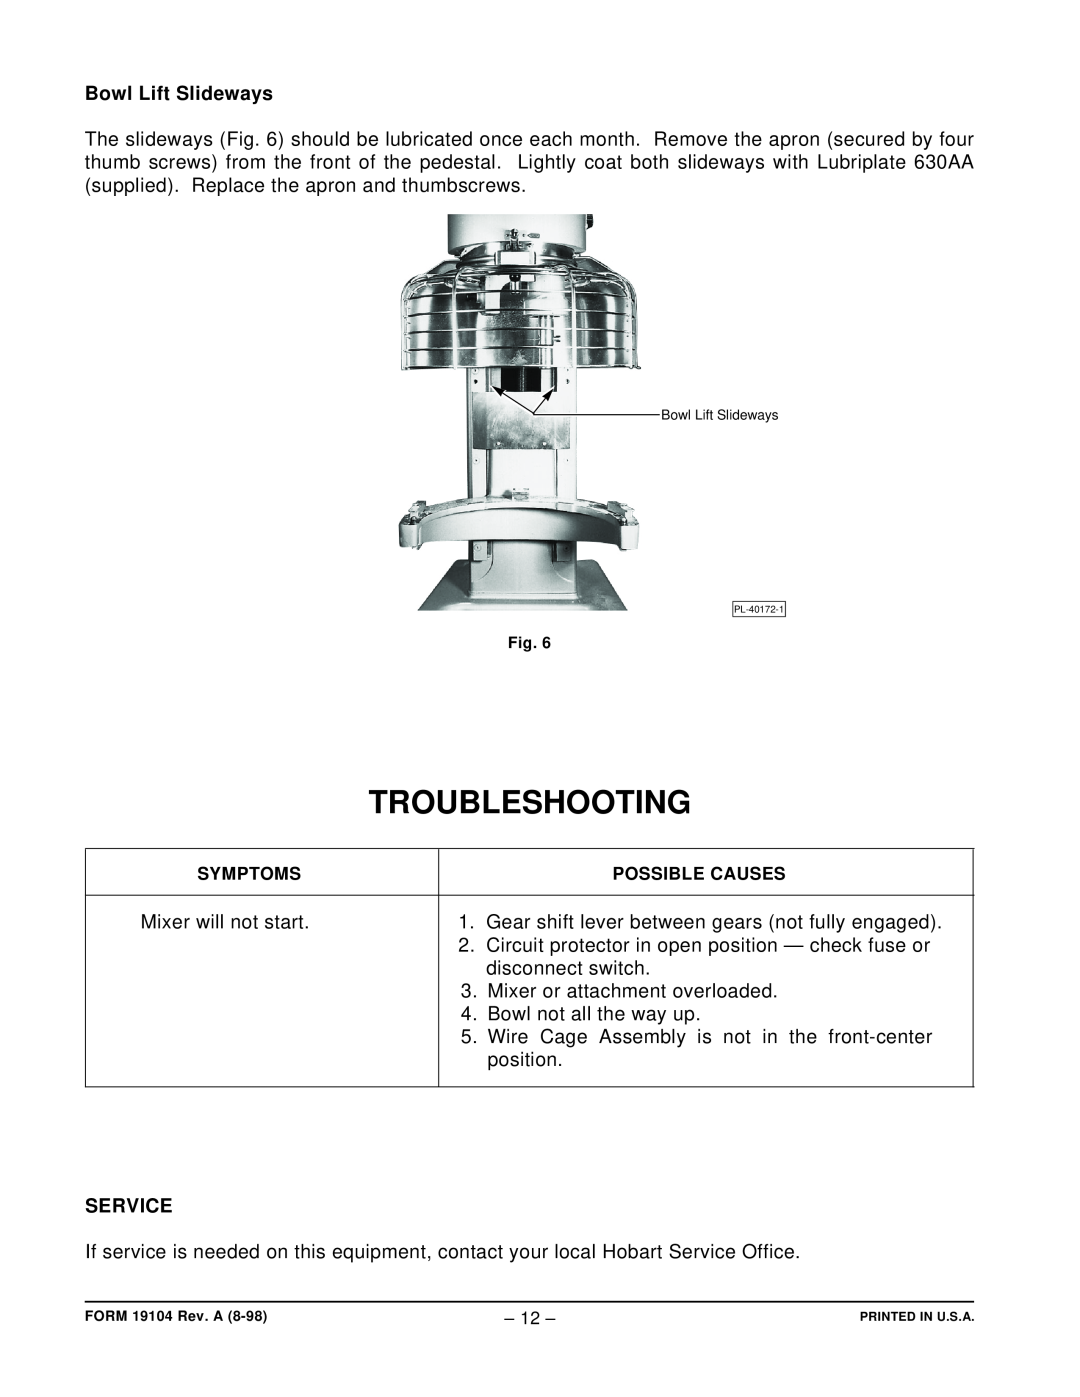 Hobart D340 manual Troubleshooting, Bowl Lift Slideways, Service 